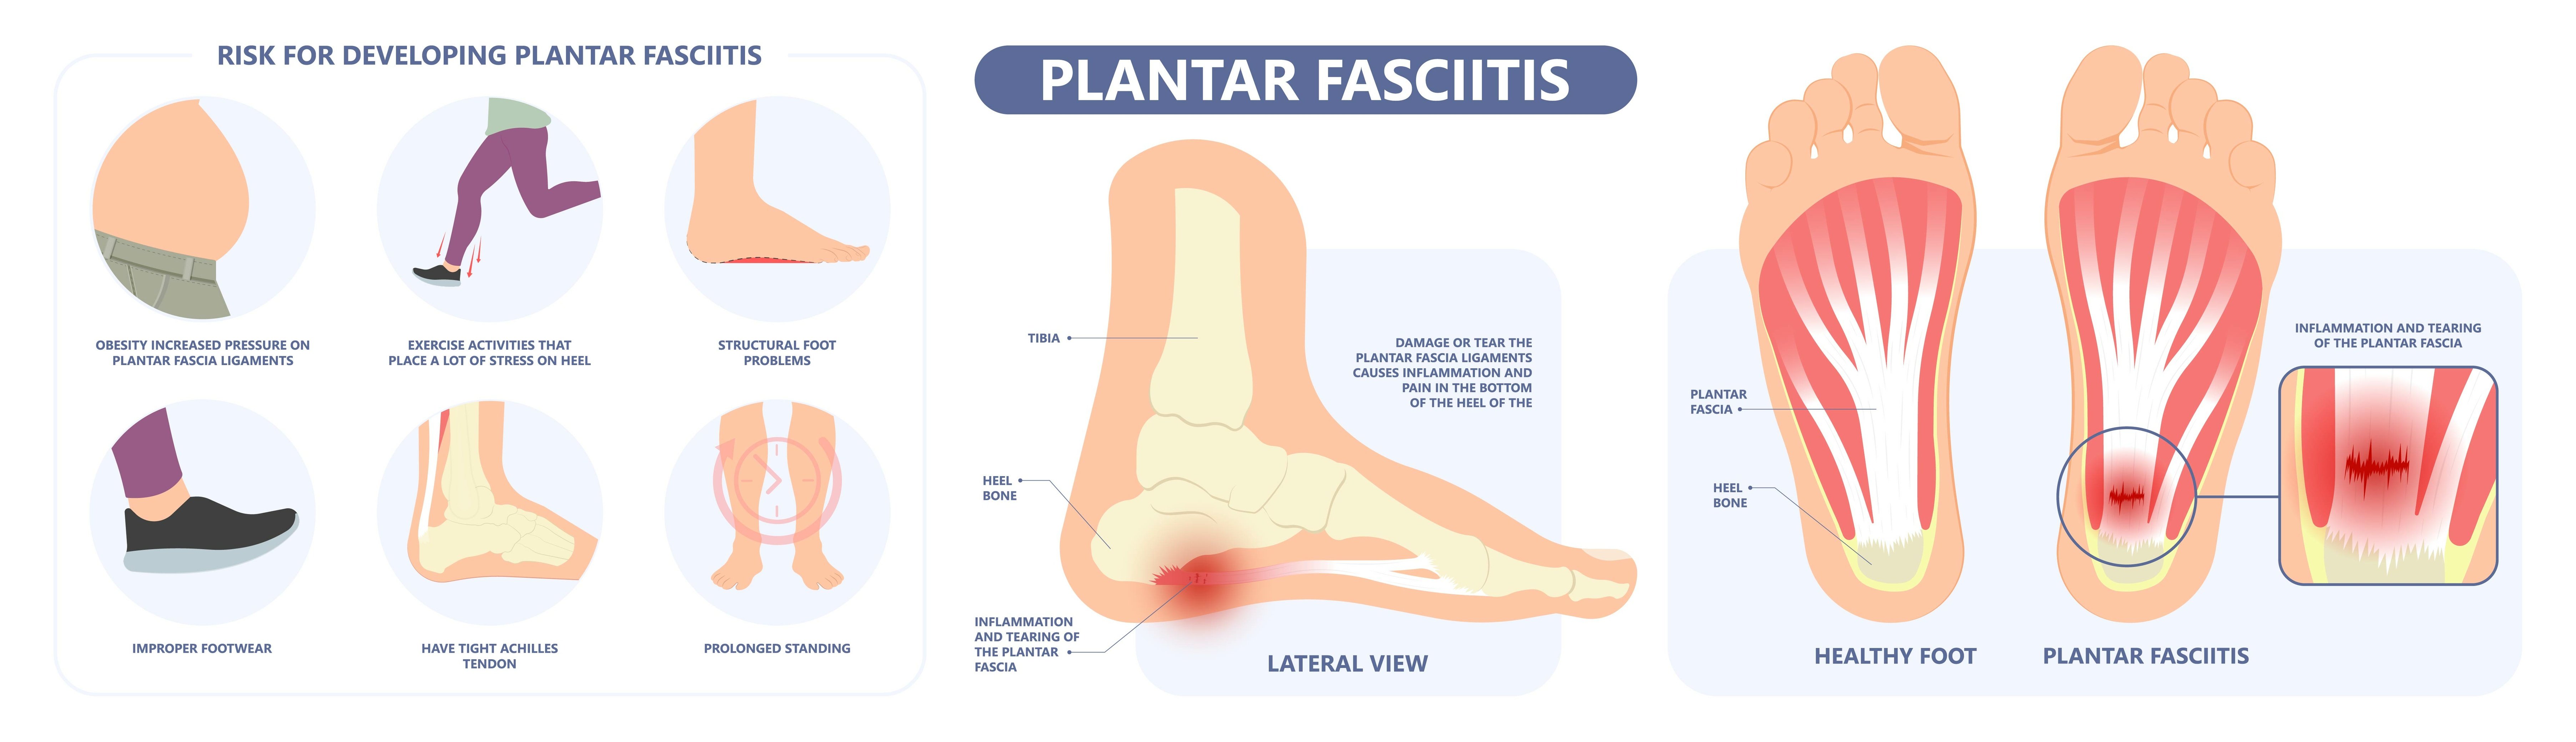 Plantar fasciitis — treatment, symptoms and causes | healthdirect